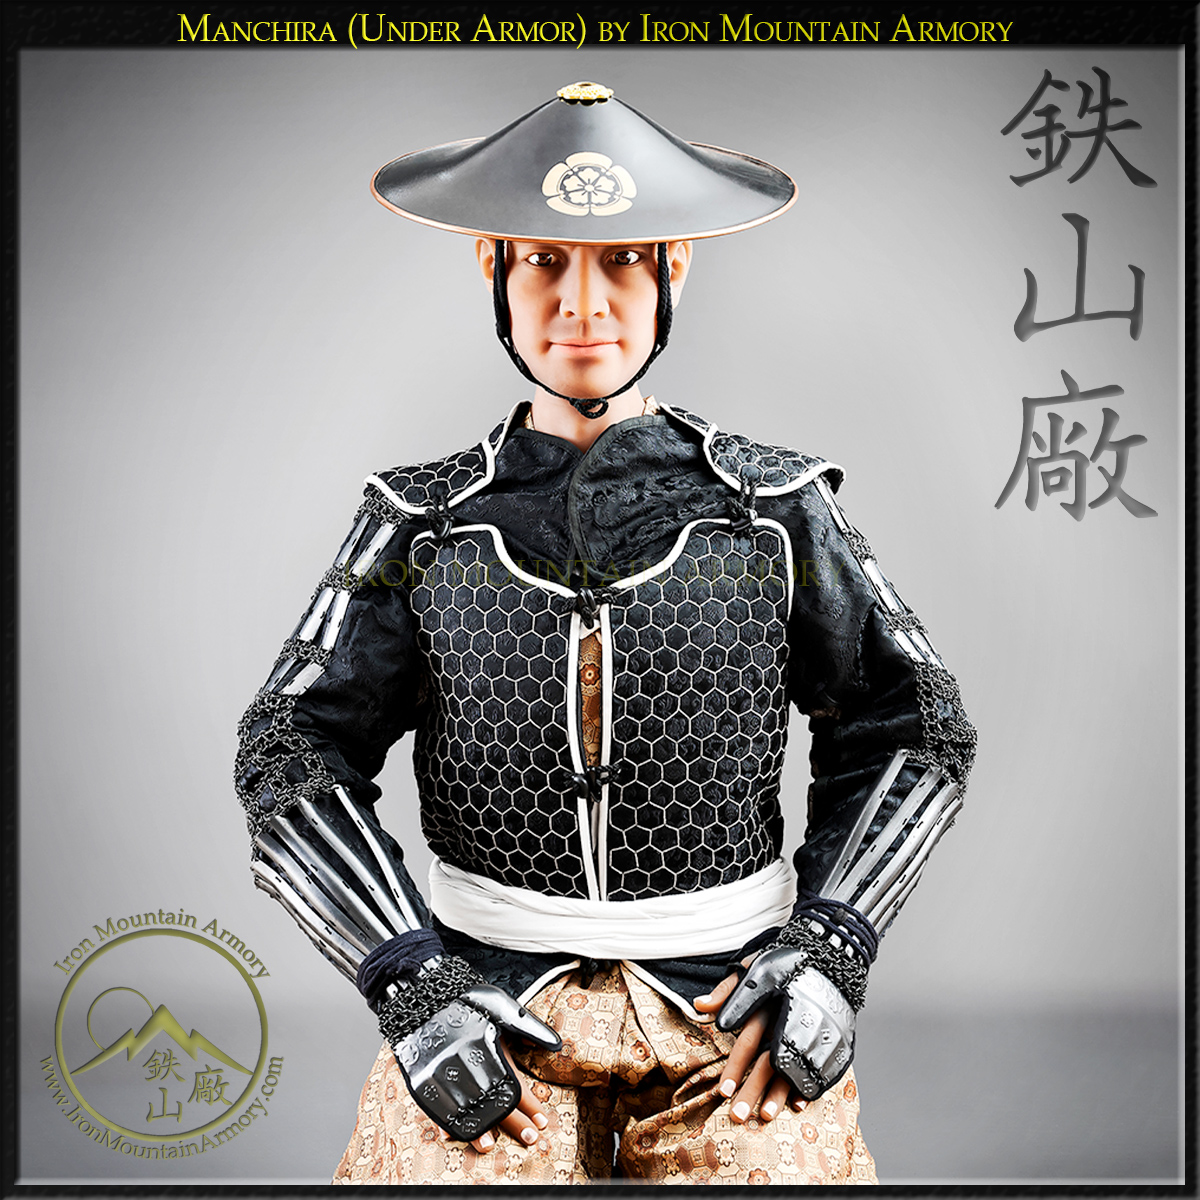 Manchira (Under Armor) - Lightweight Flexible Auxiliary Chest Armor worn by  Samurai